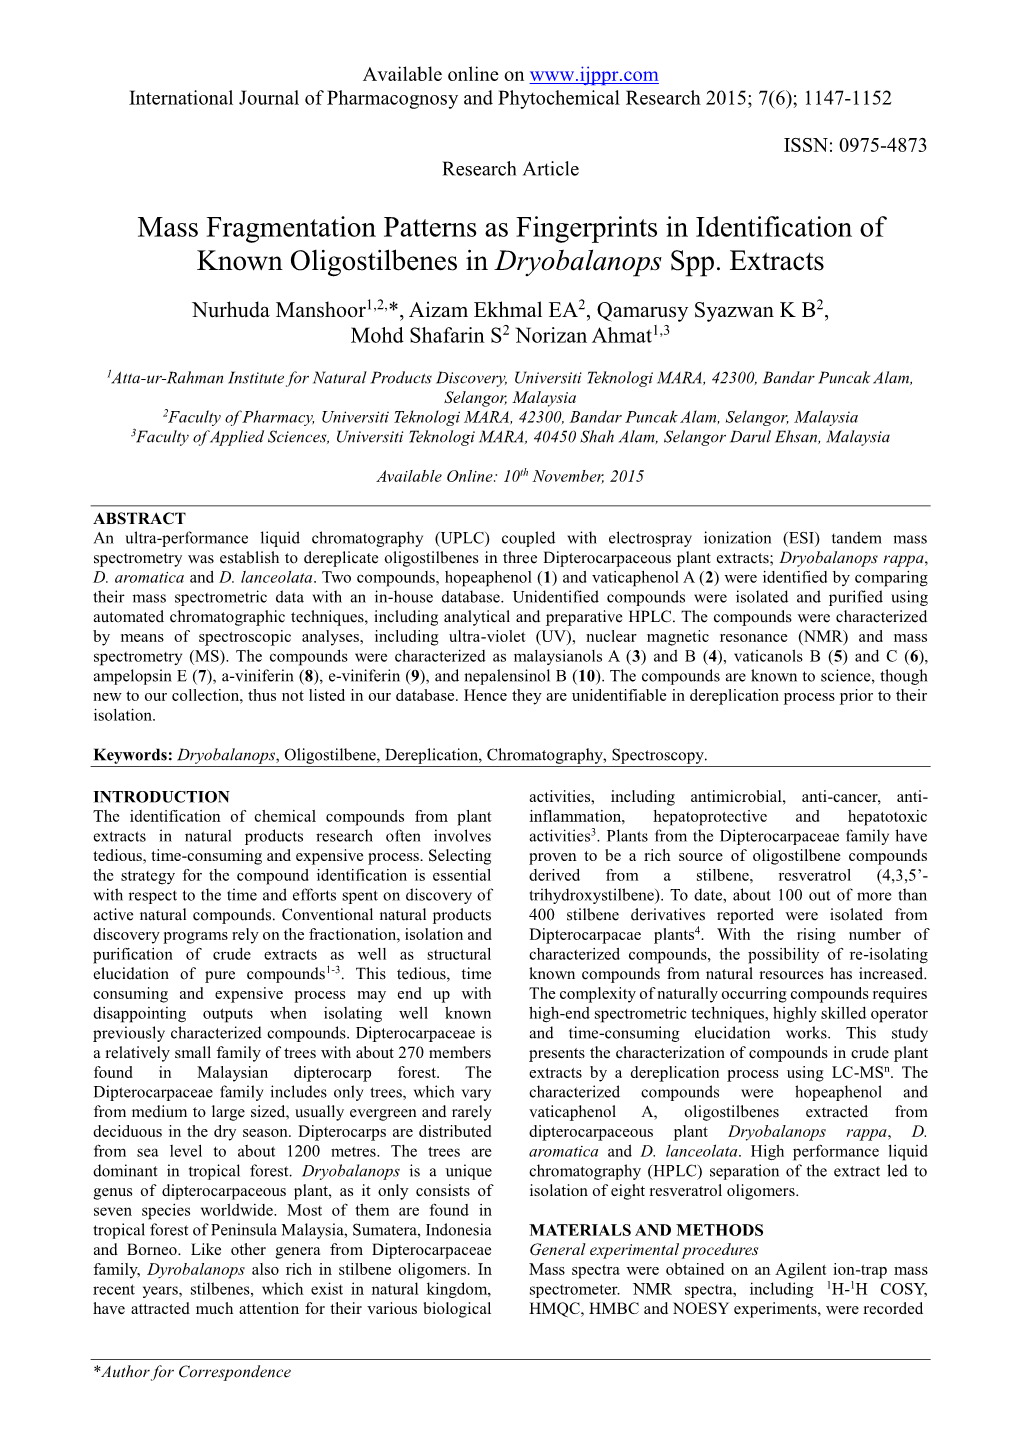 Mass Fragmentation Patterns As Fingerprints in Identification of Known Oligostilbenes in Dryobalanops Spp